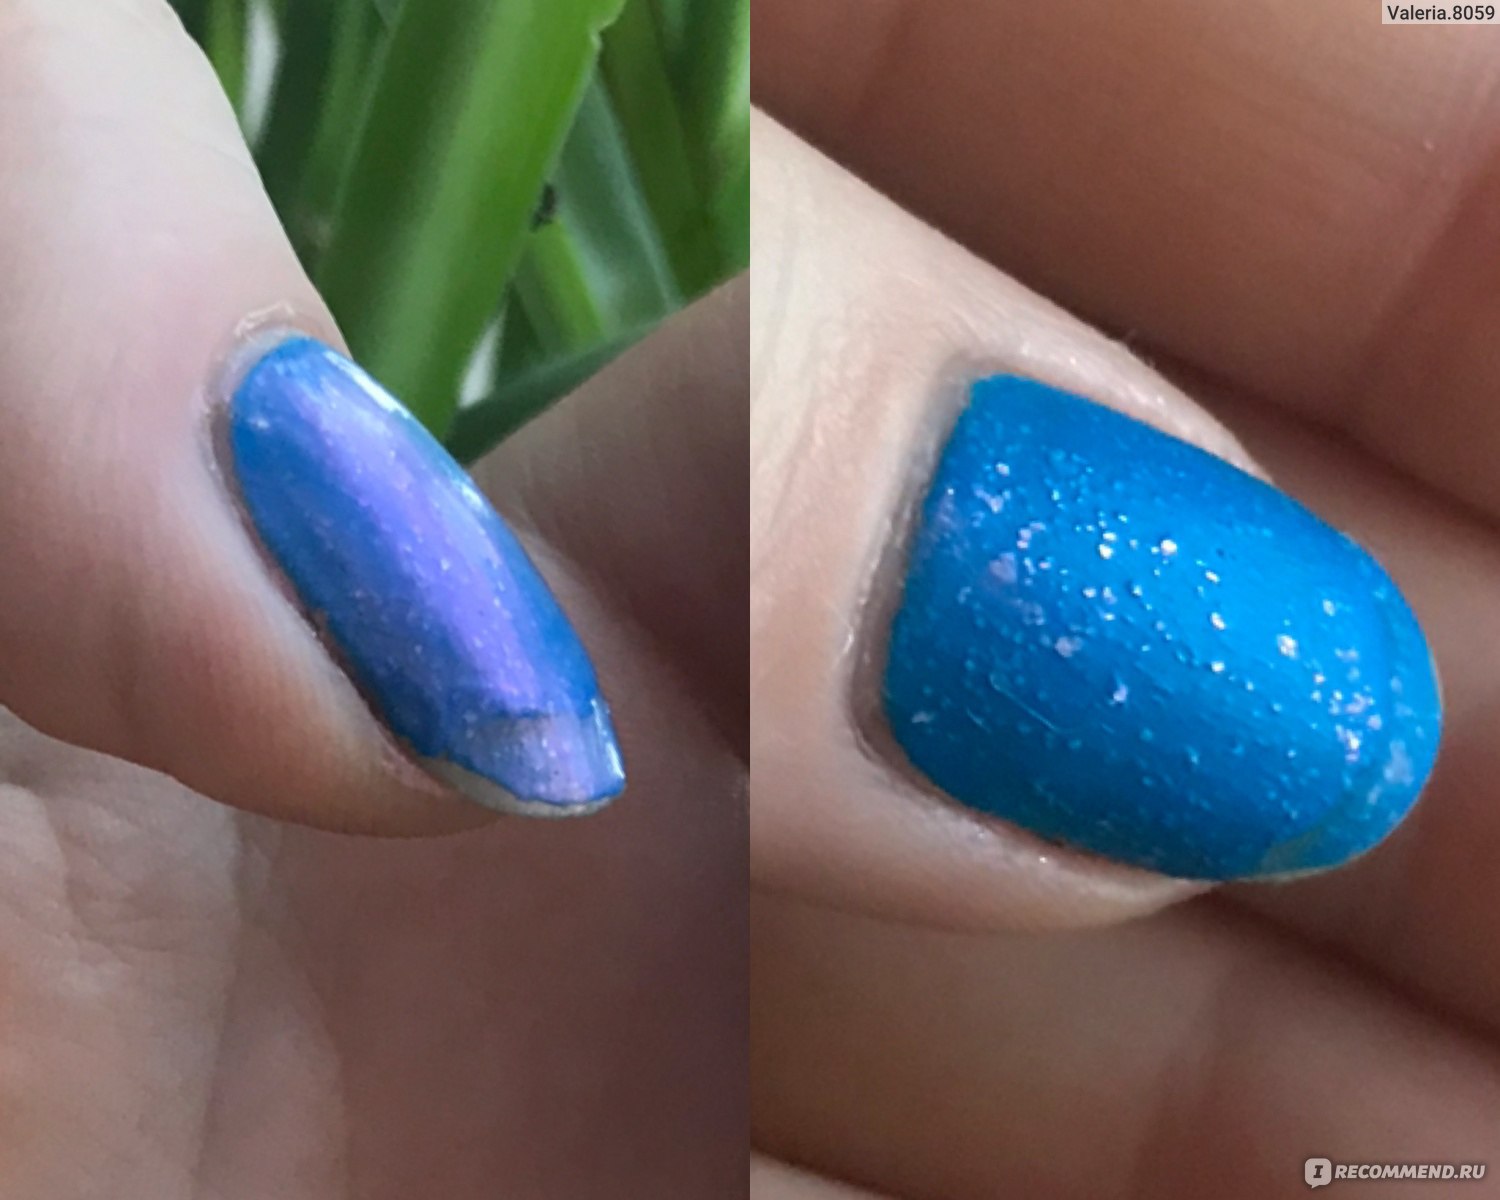 Лак для ногтей jeanmishel Gel Formula nail polish фото